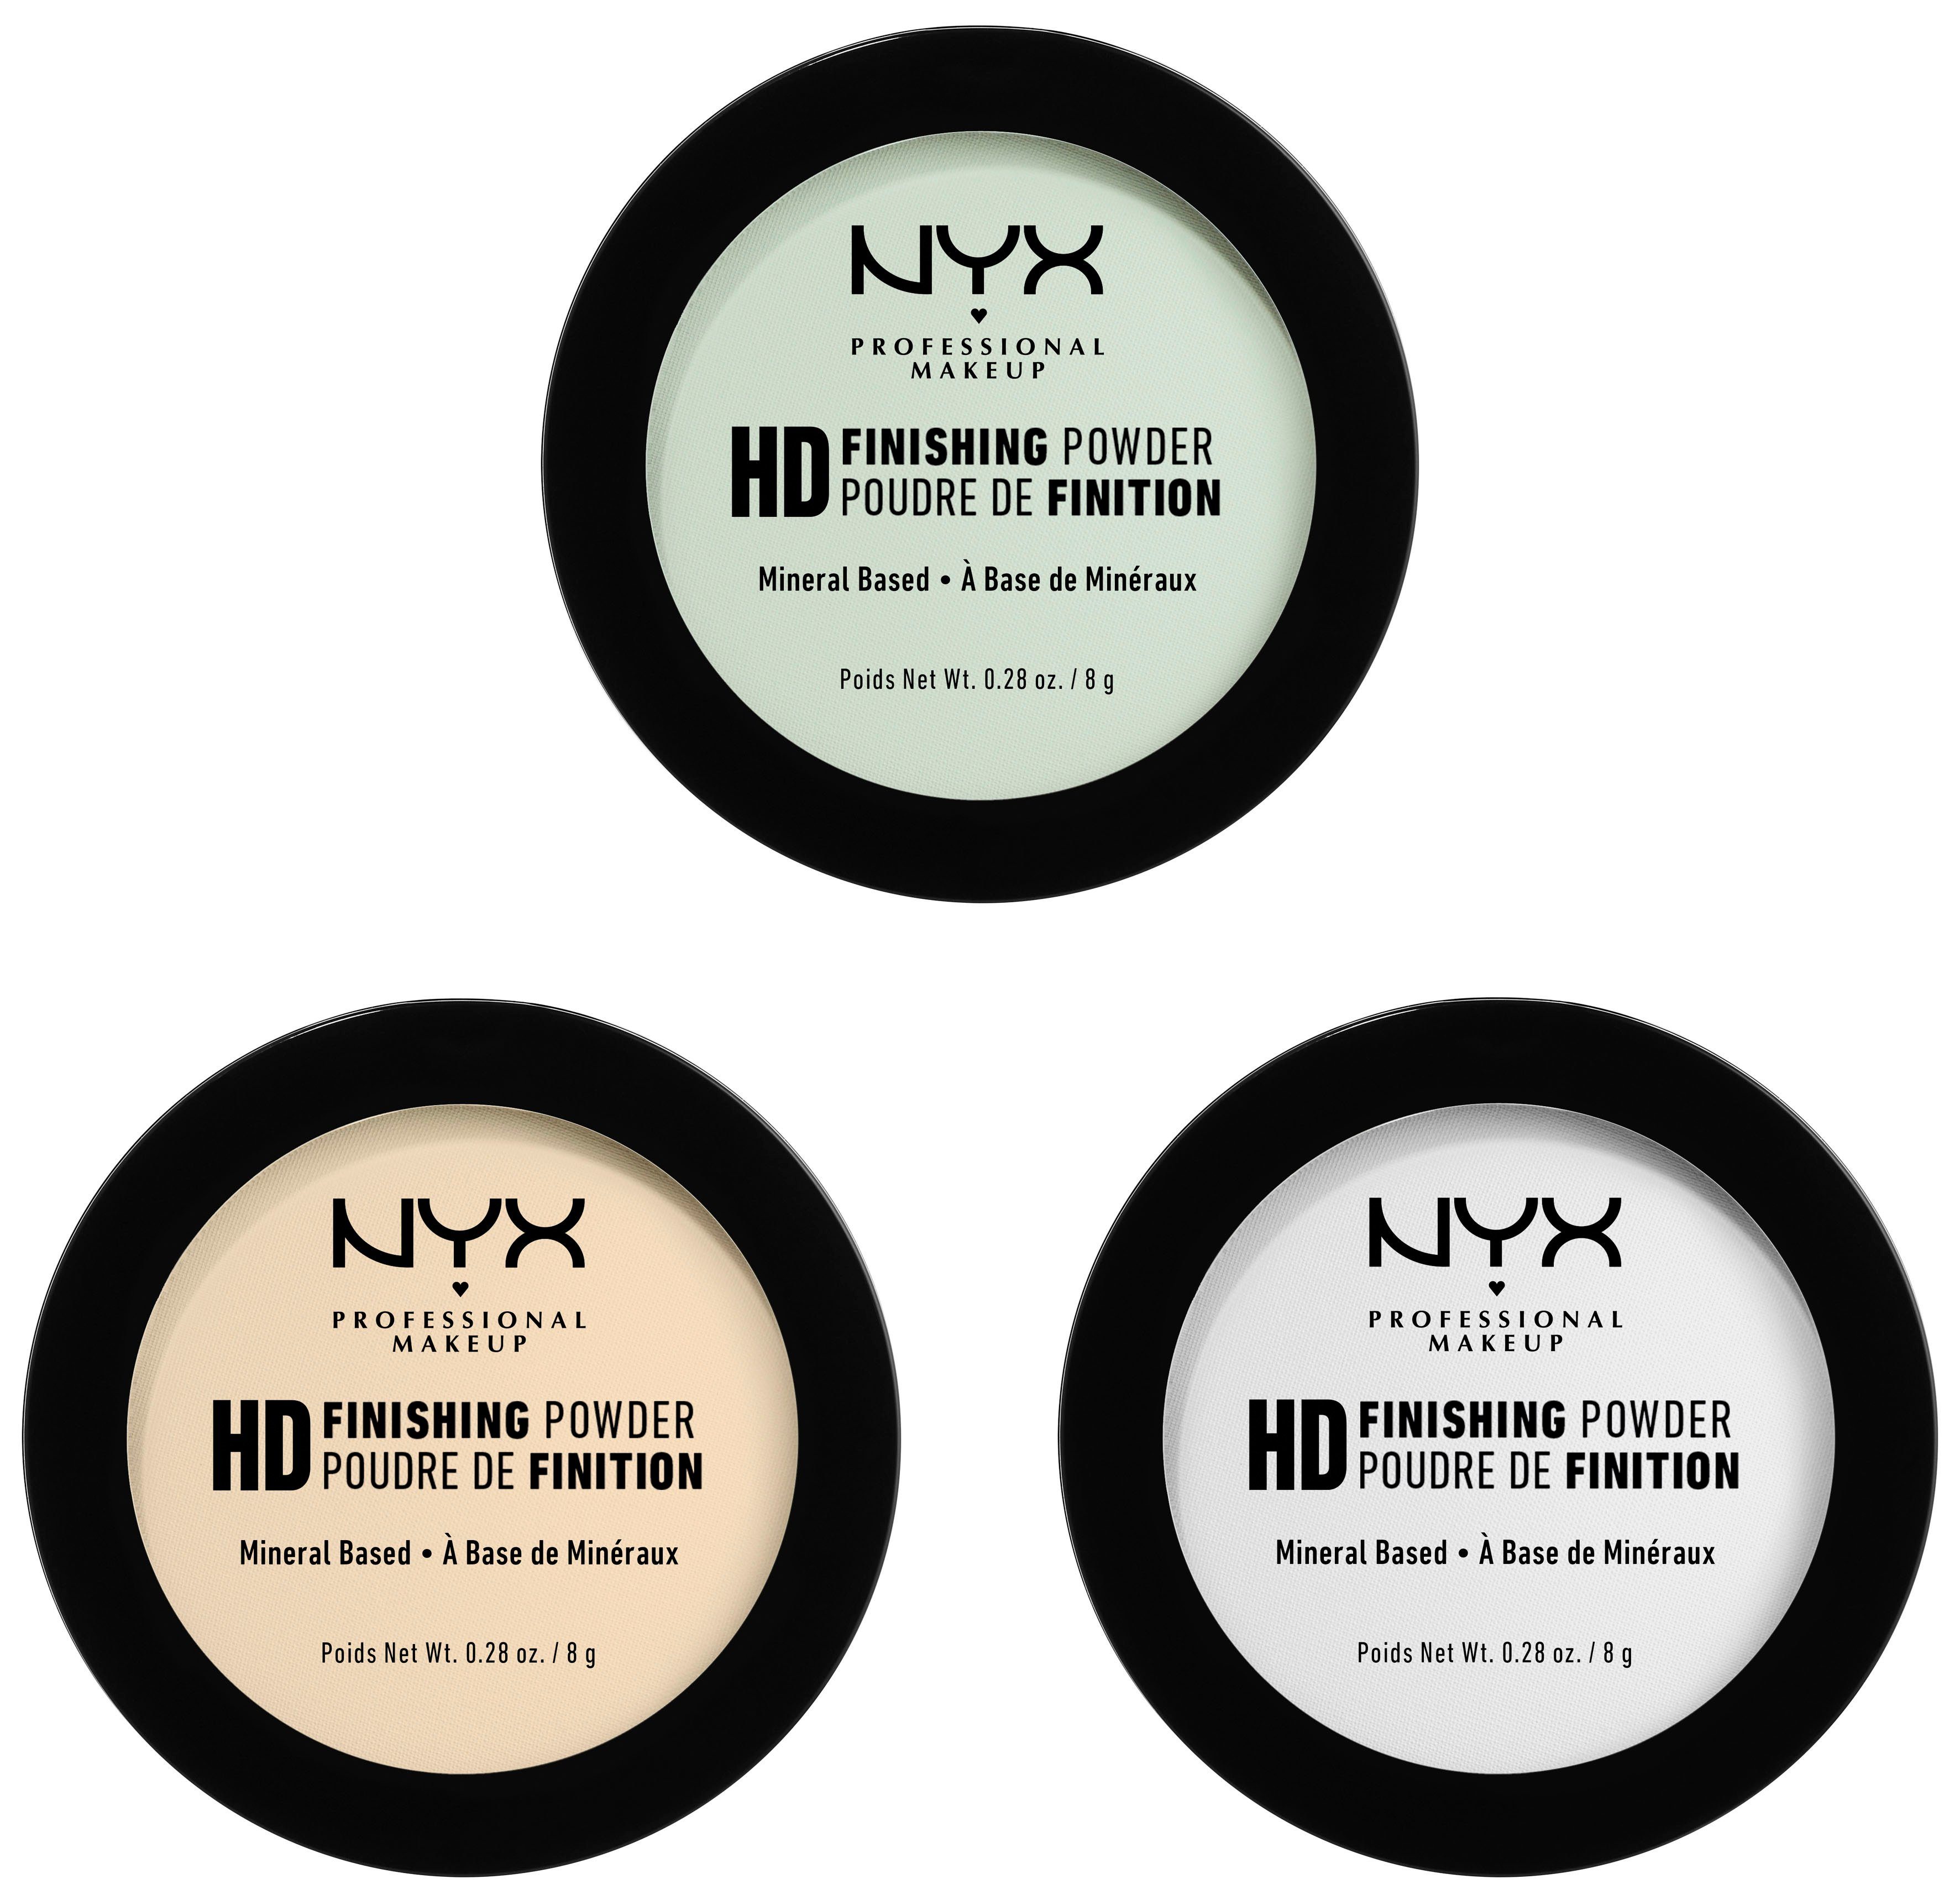 High Makeup Professional NYX NYX Definition Powder Finishing Puder